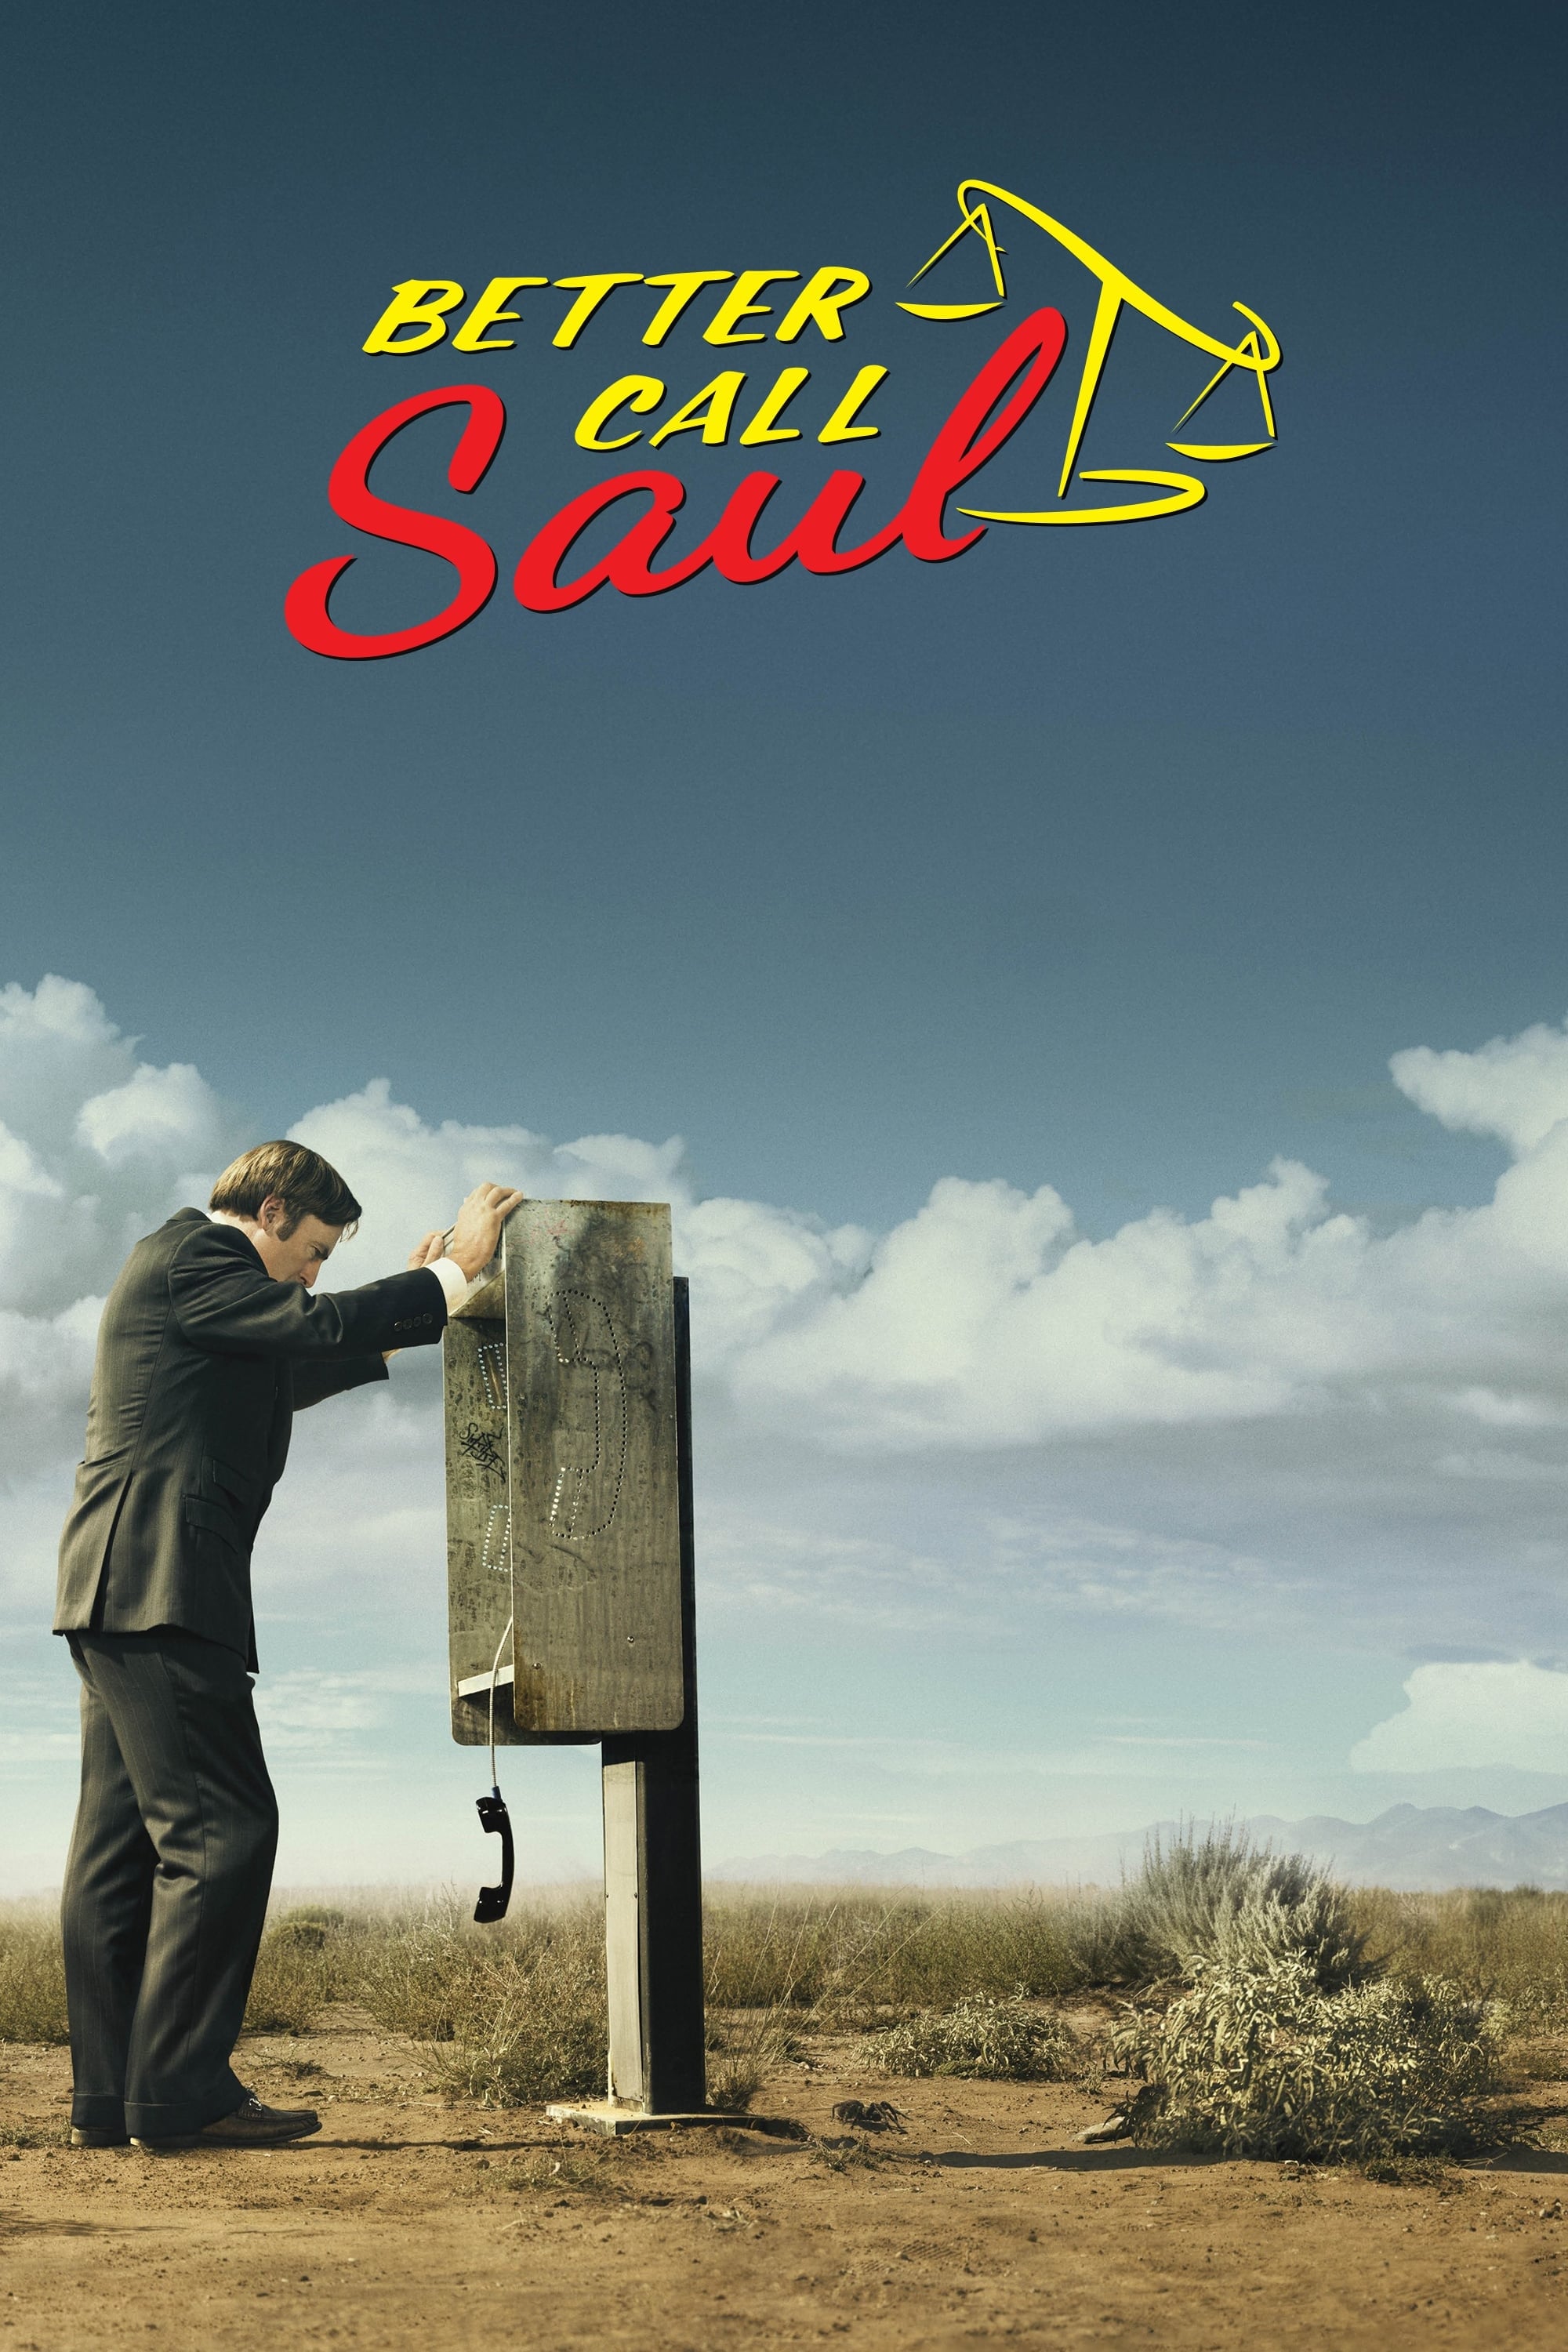 Better Call Saul (season 1)